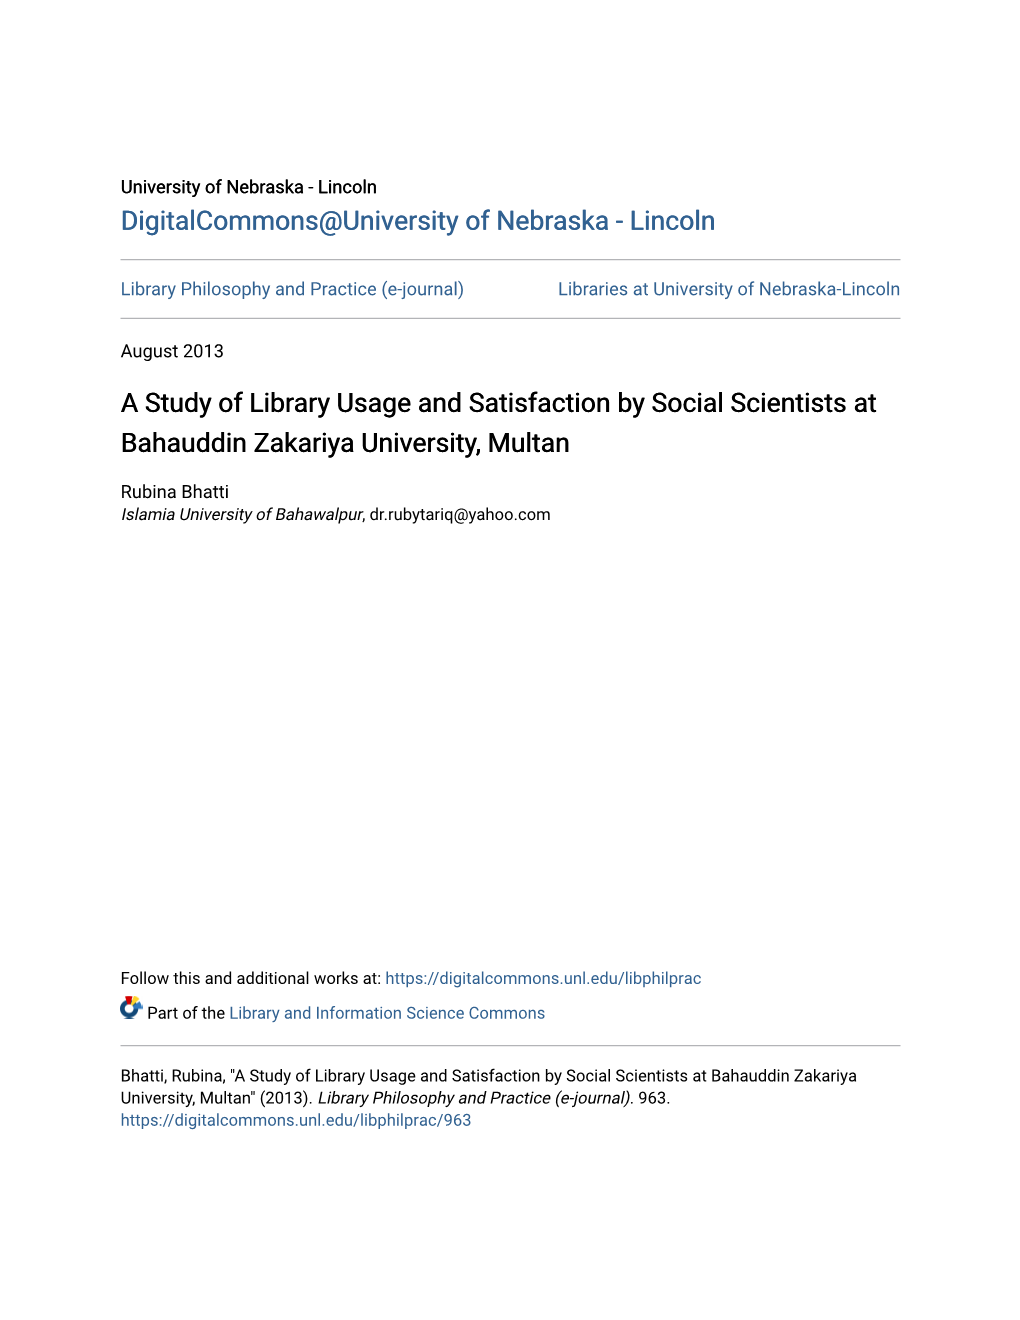 A Study of Library Usage and Satisfaction by Social Scientists at Bahauddin Zakariya University, Multan